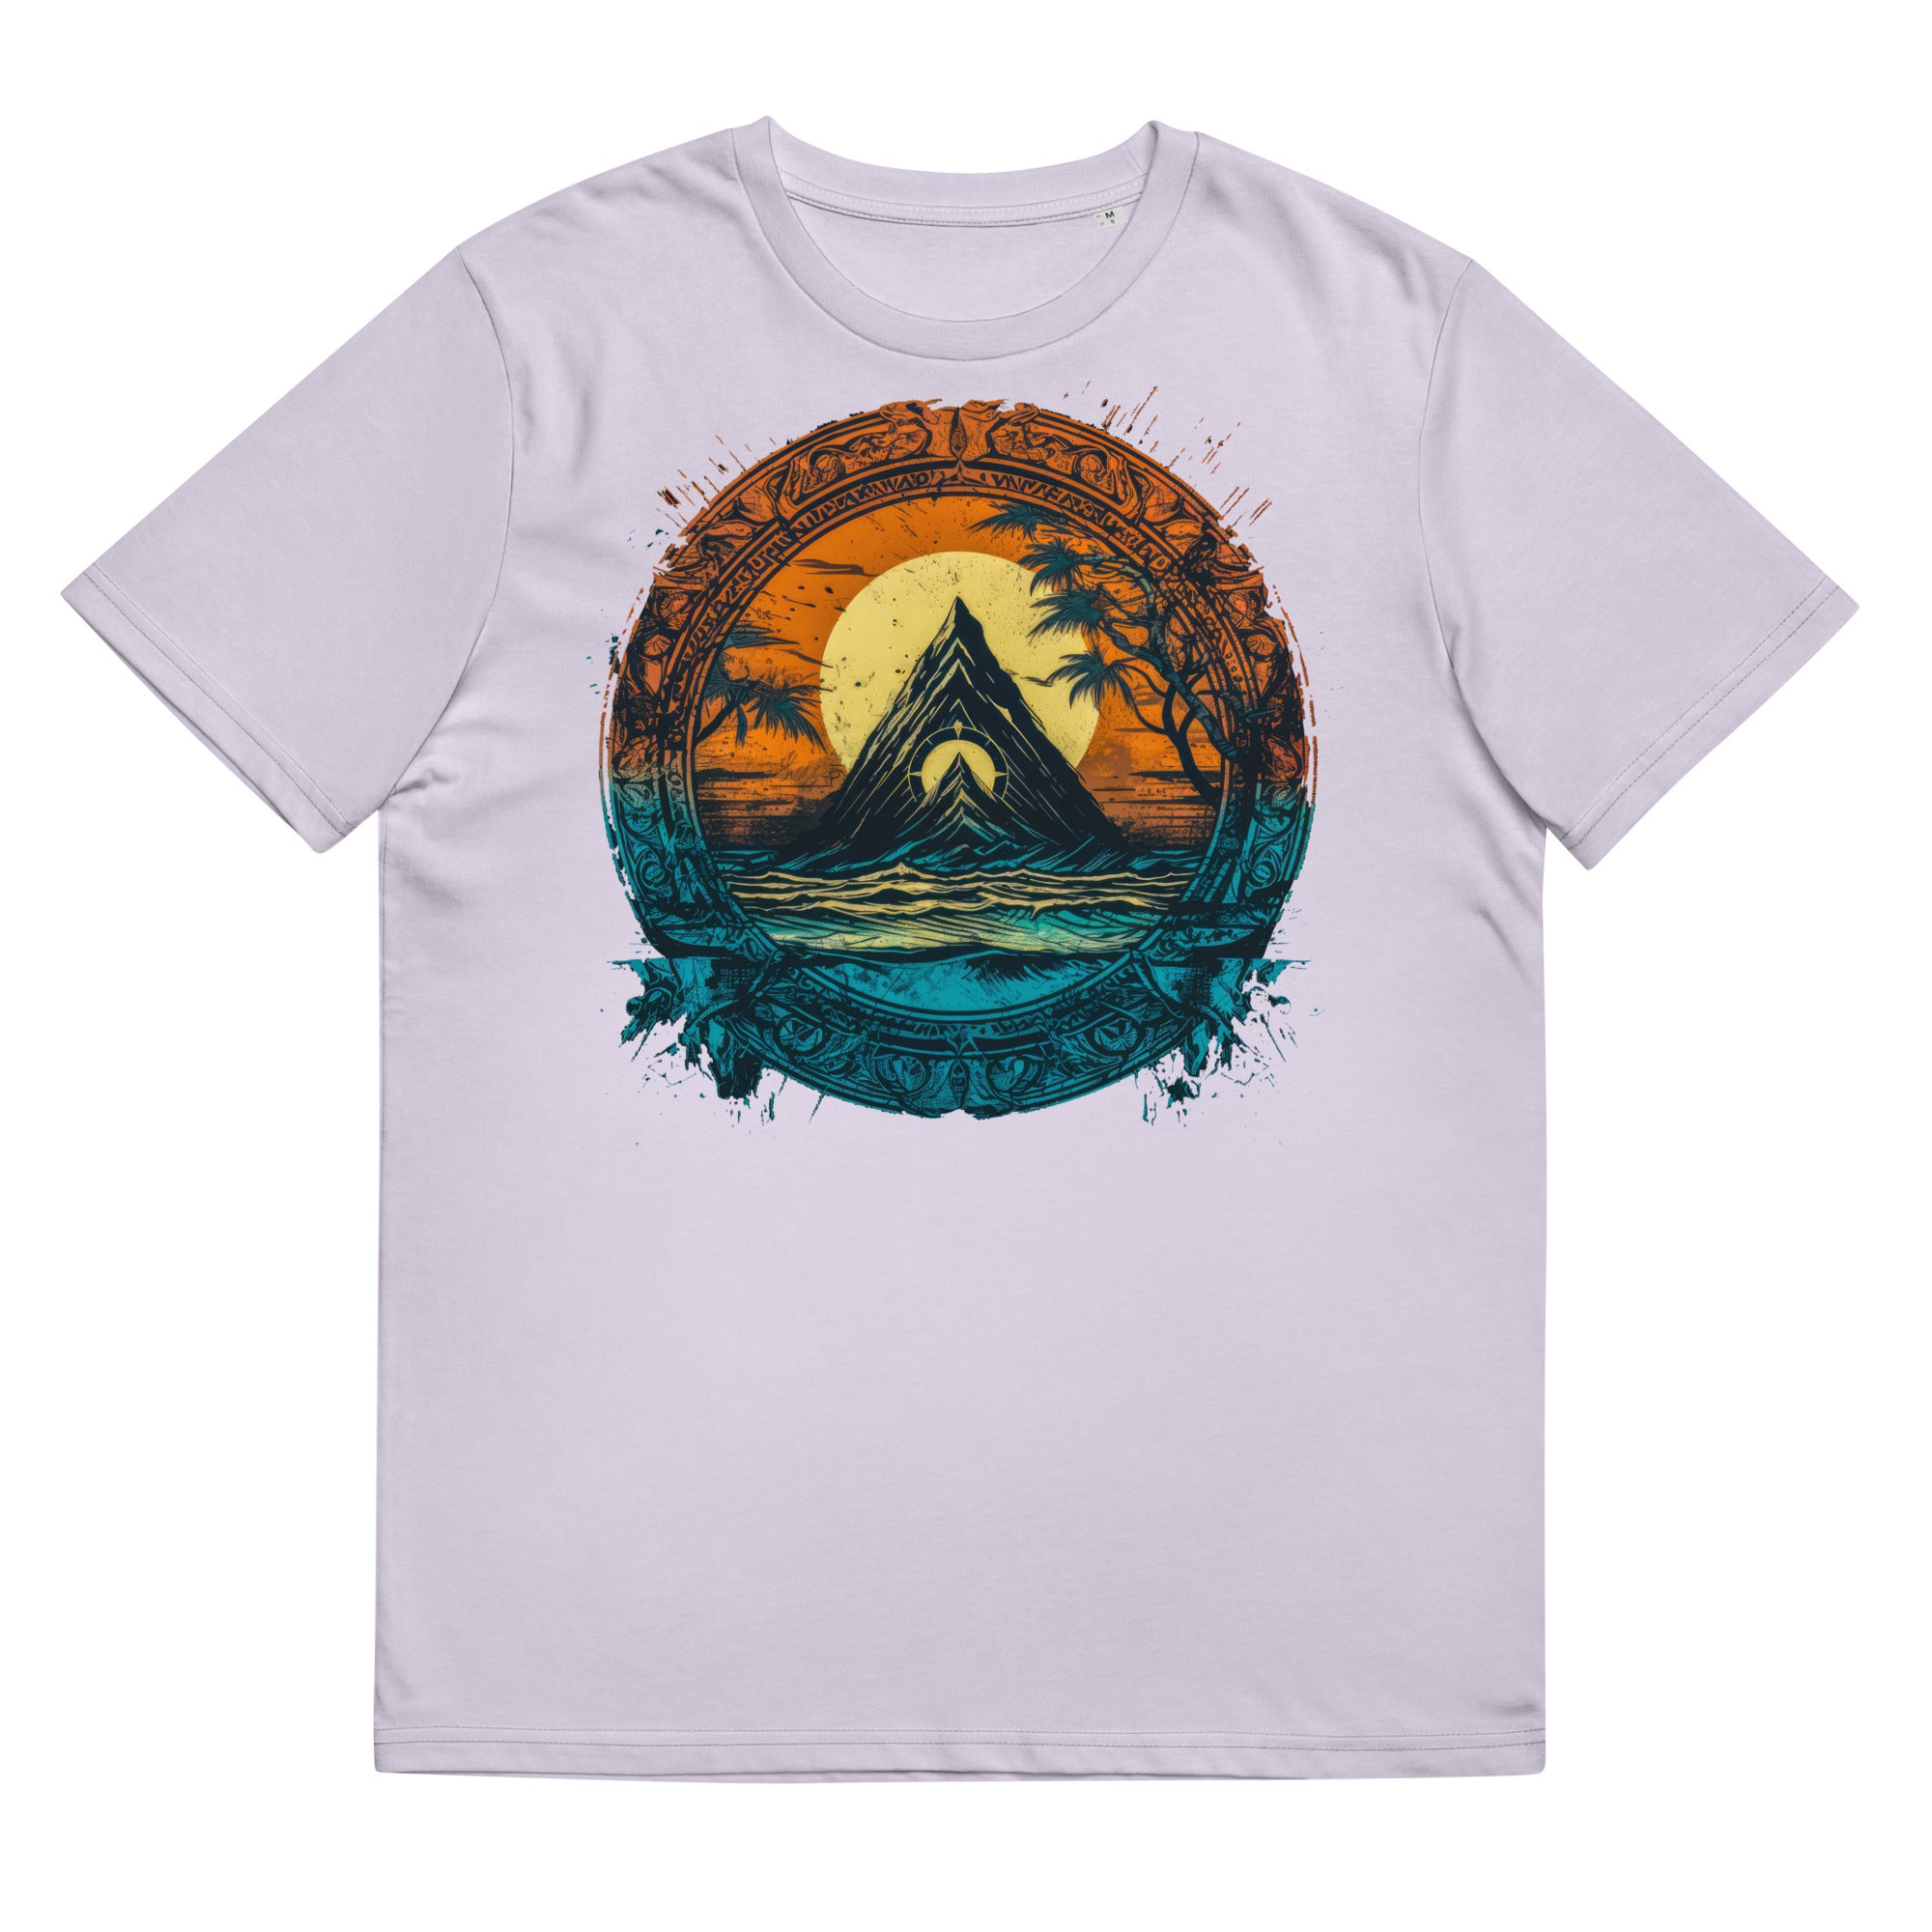 Ocean mountain emblem